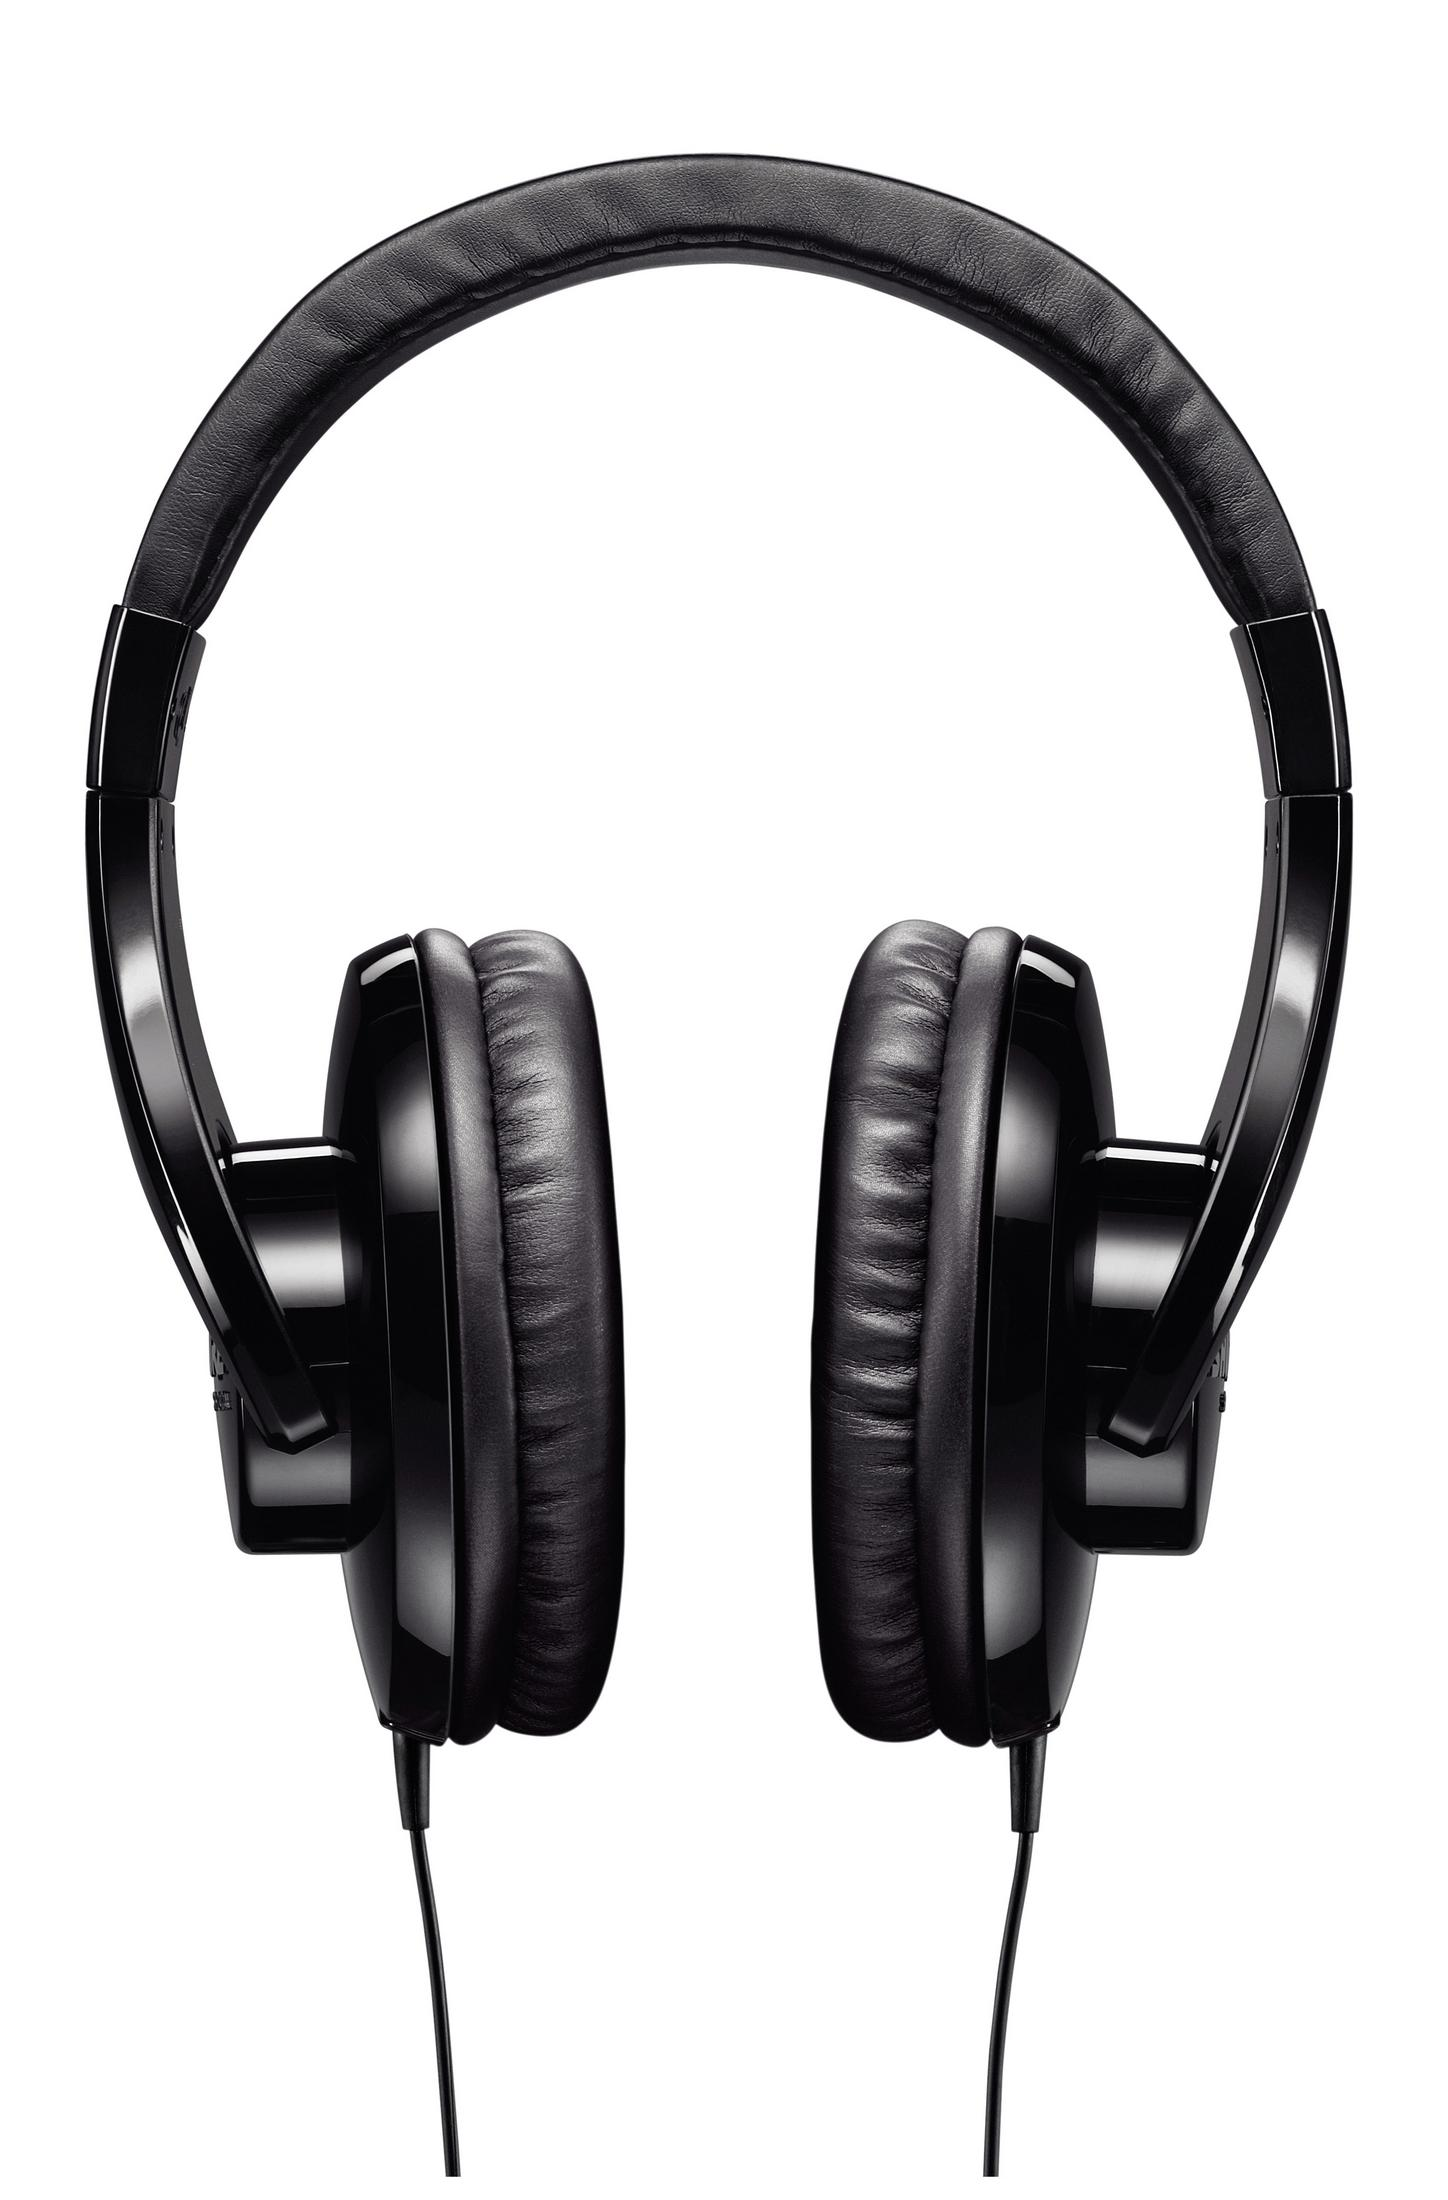 SRH240A-EFS                                , Schwarz SHURE Over-ear Kopfhörer